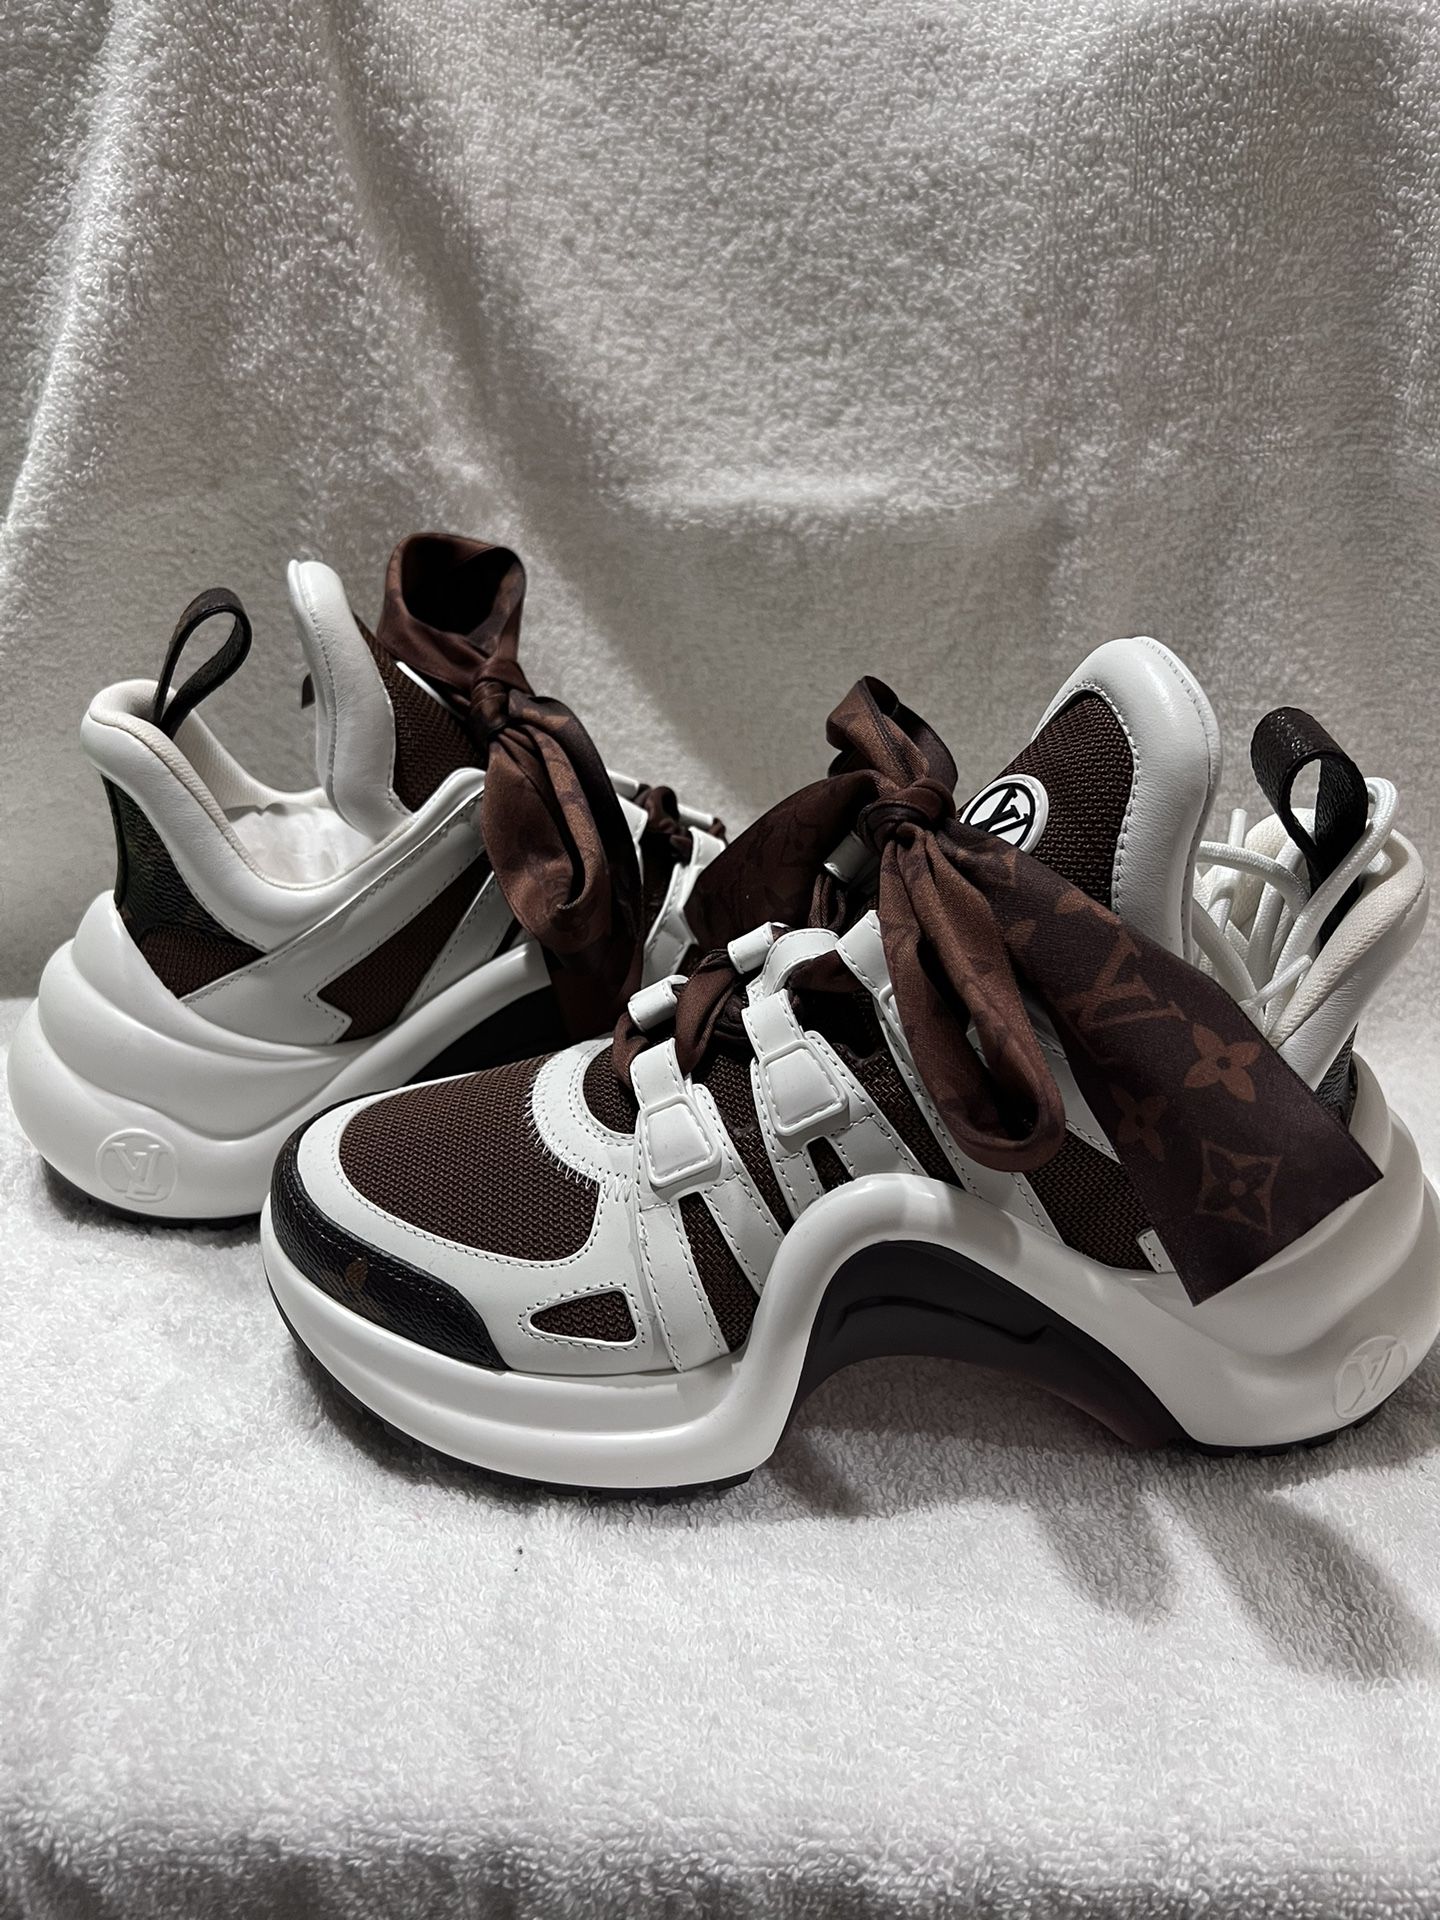 LOUIS VUITTON LV Archlight Sneaker White. Size 35